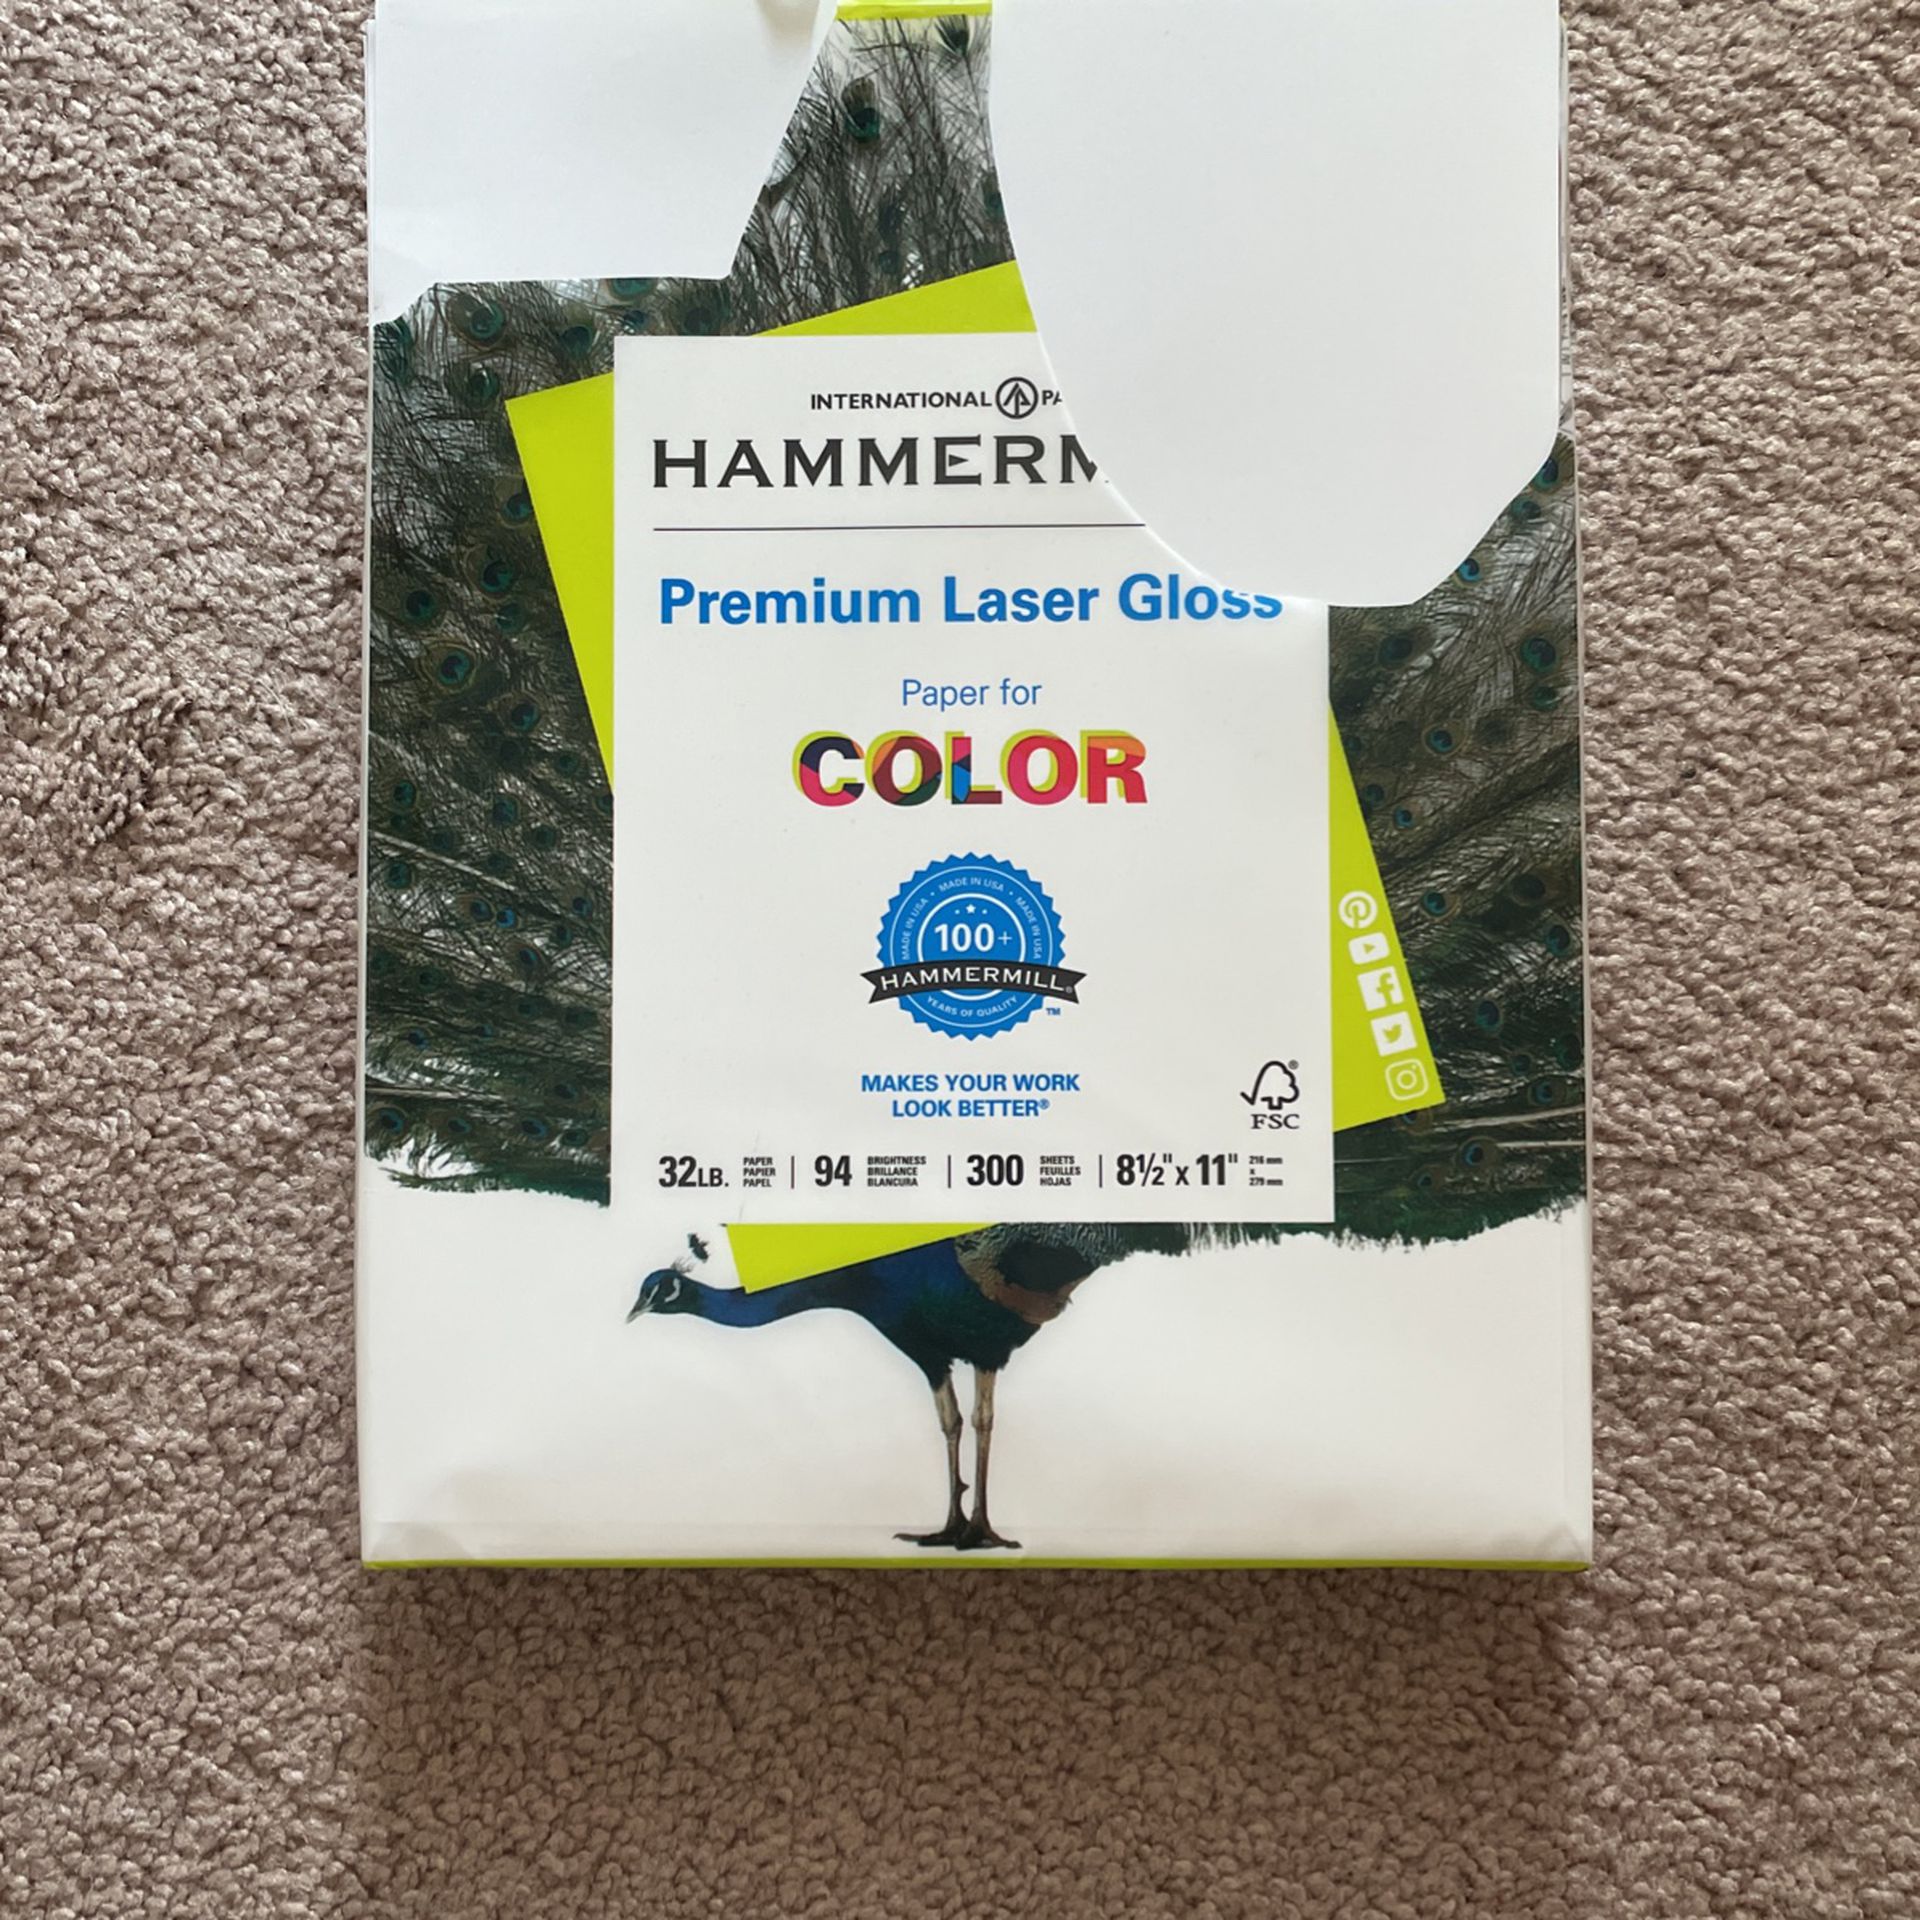 Hammermill Premium Laser Gloss Paper